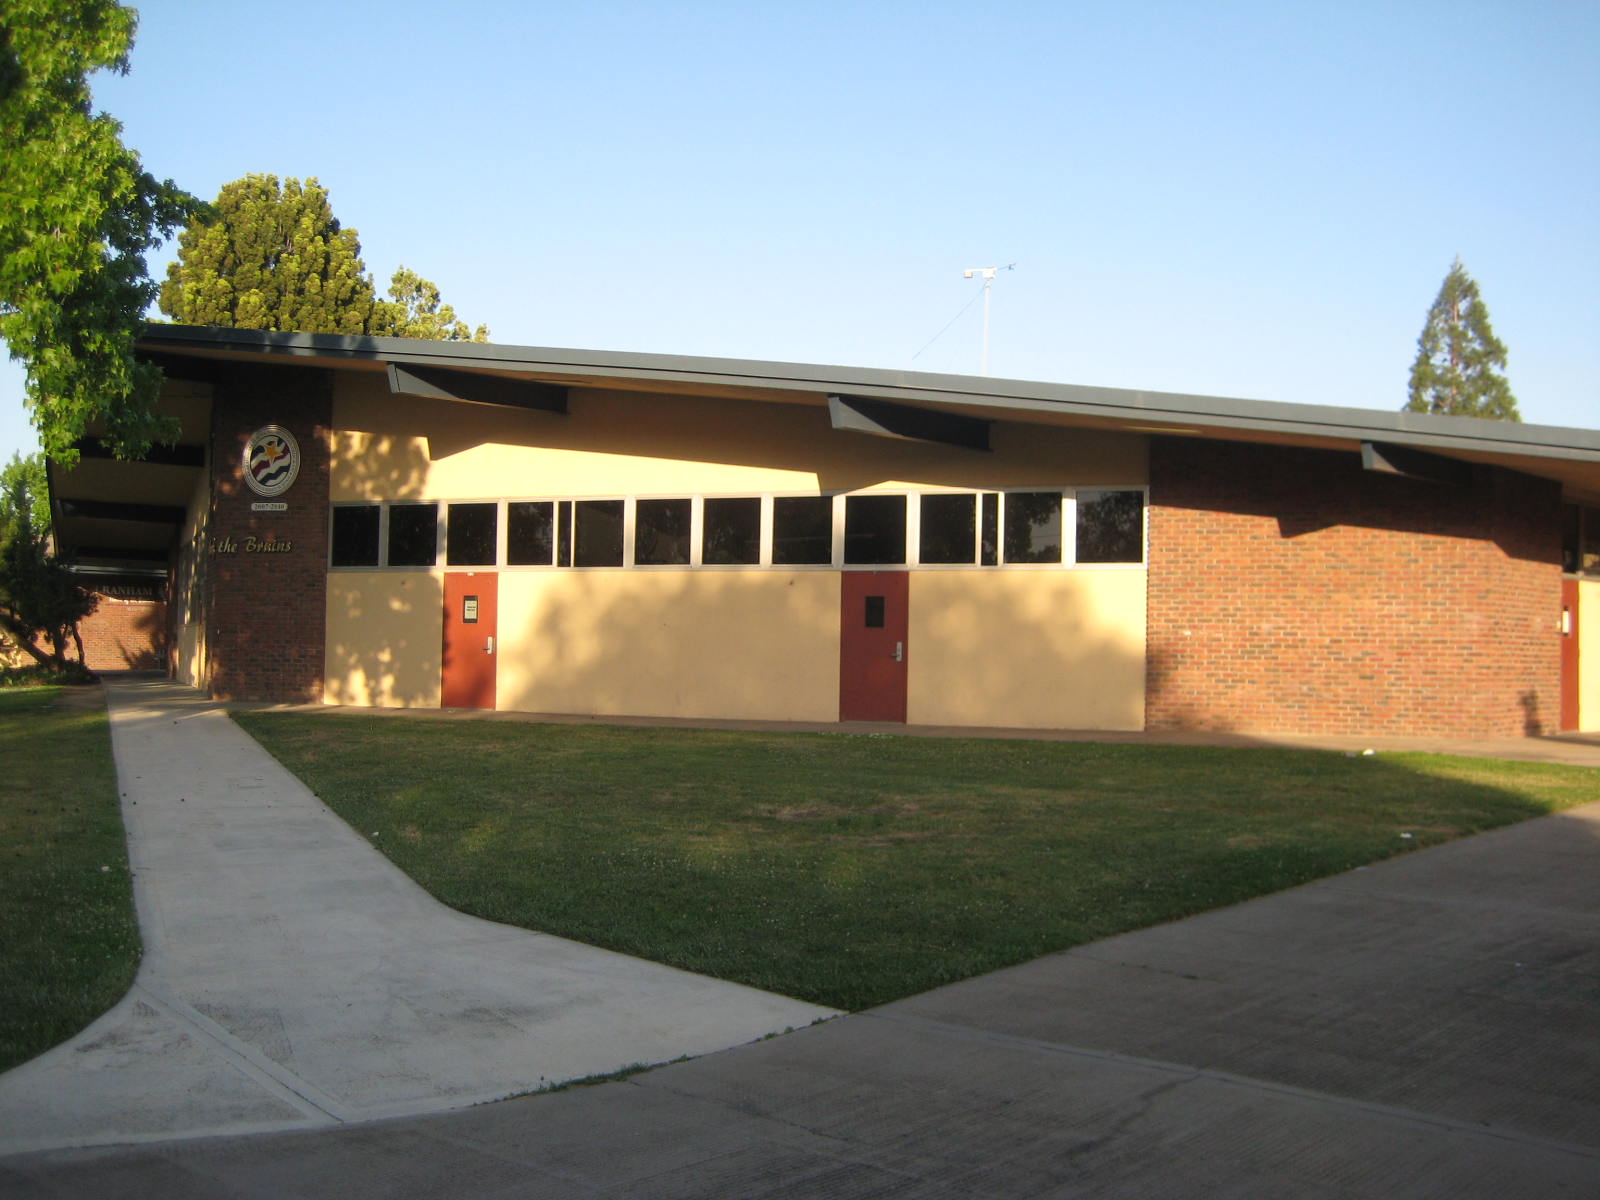 Branham High School San Jose, California